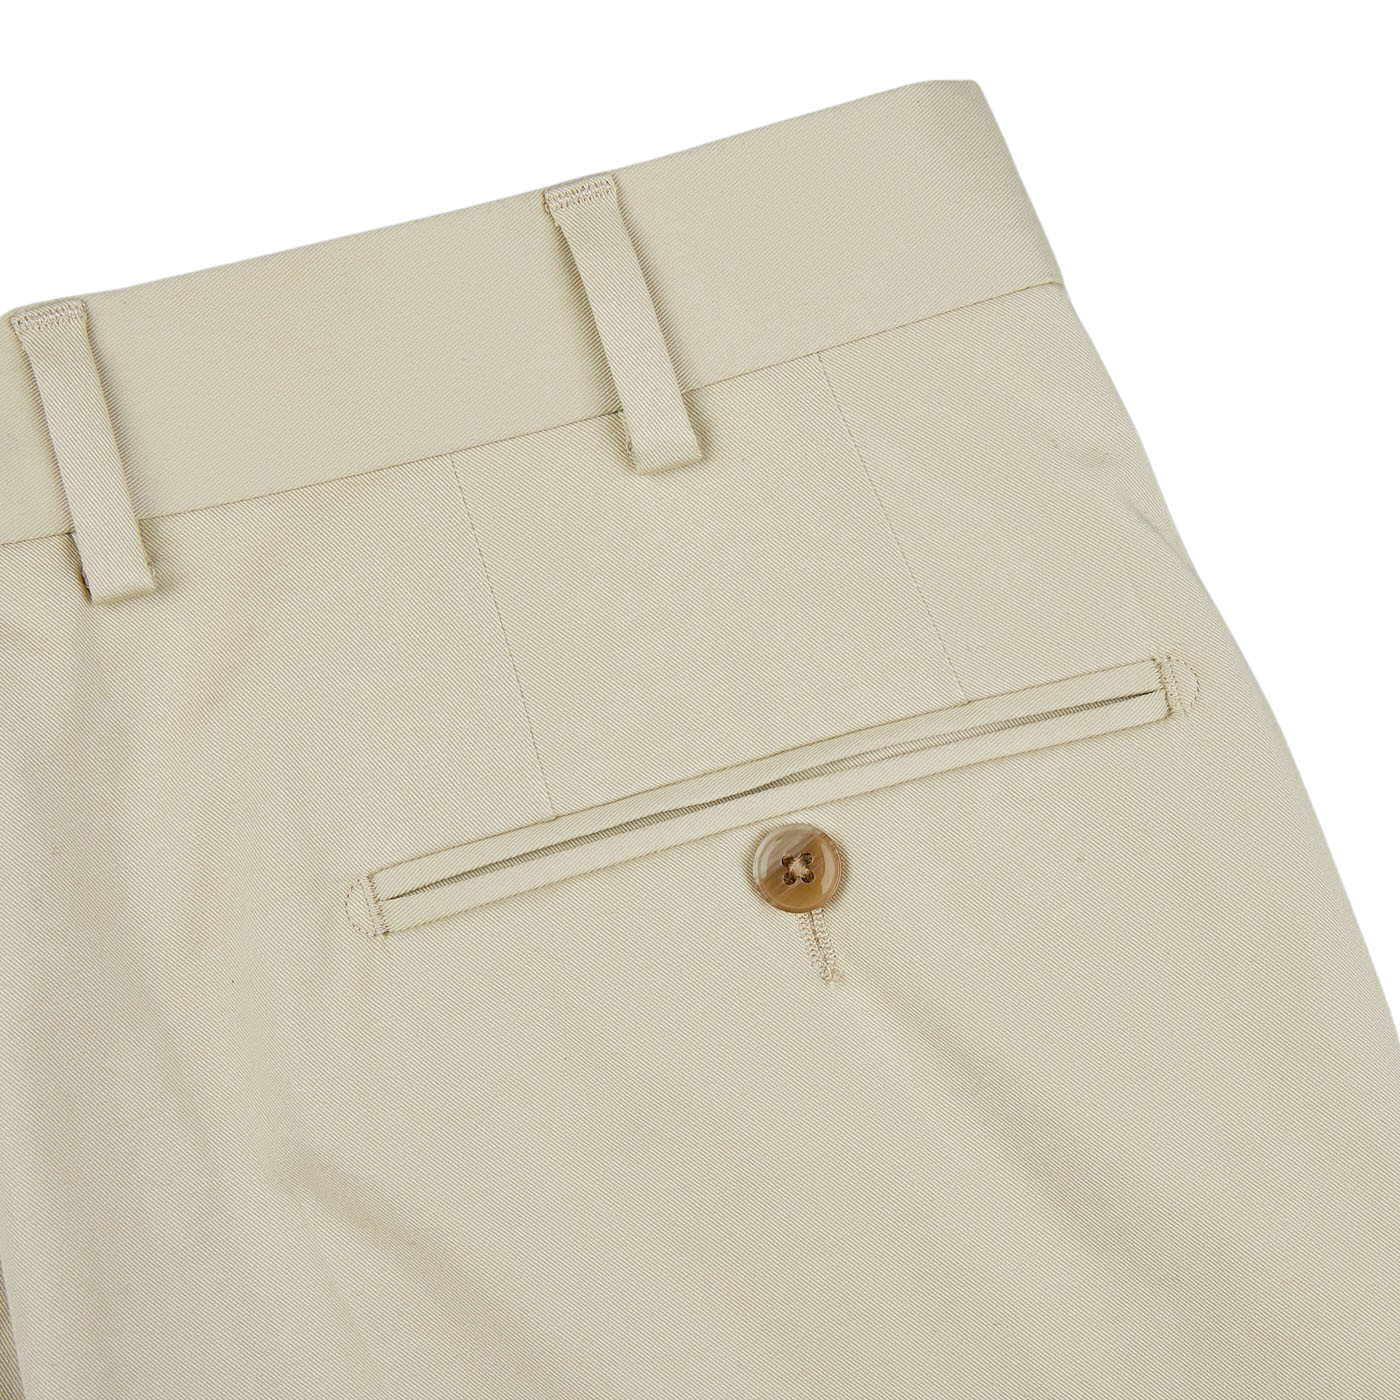 Solid Light Cream Cotton Pant